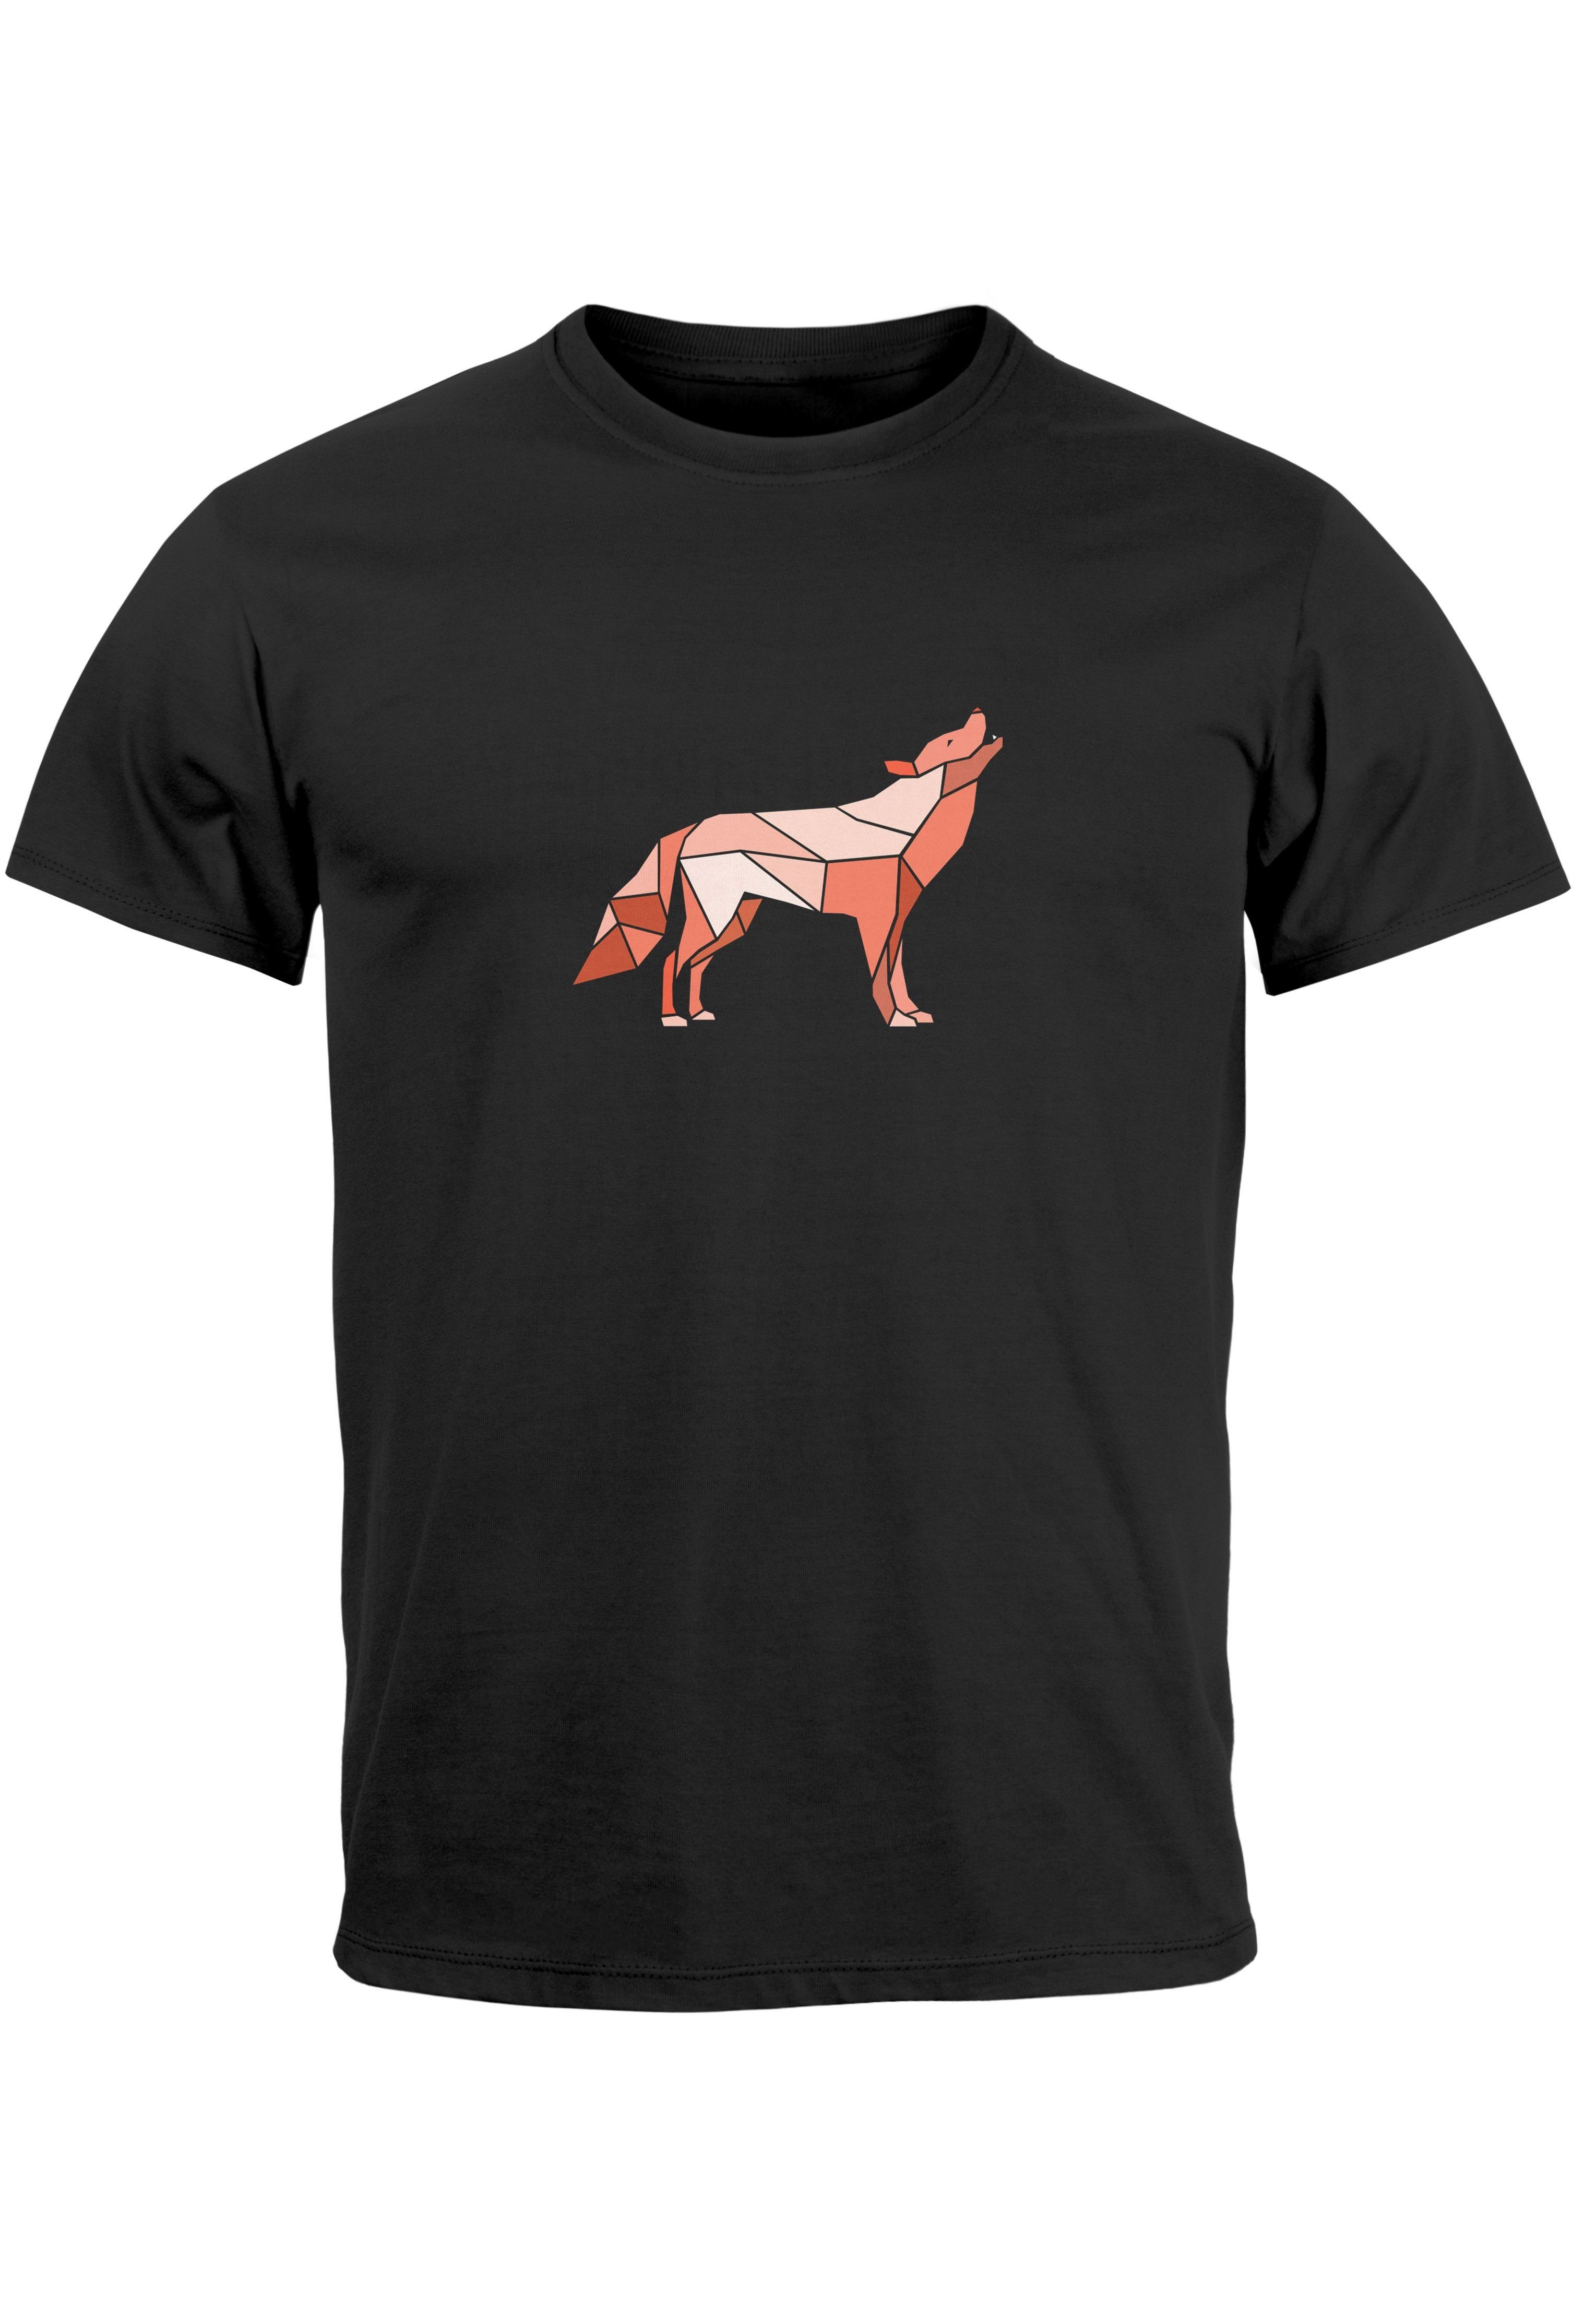 Neverless Print-Shirt Herren T-Shirt Bedruckt Polygon Grafik Wolf Outdoor Fashion Tiermotiv mit Print schwarz